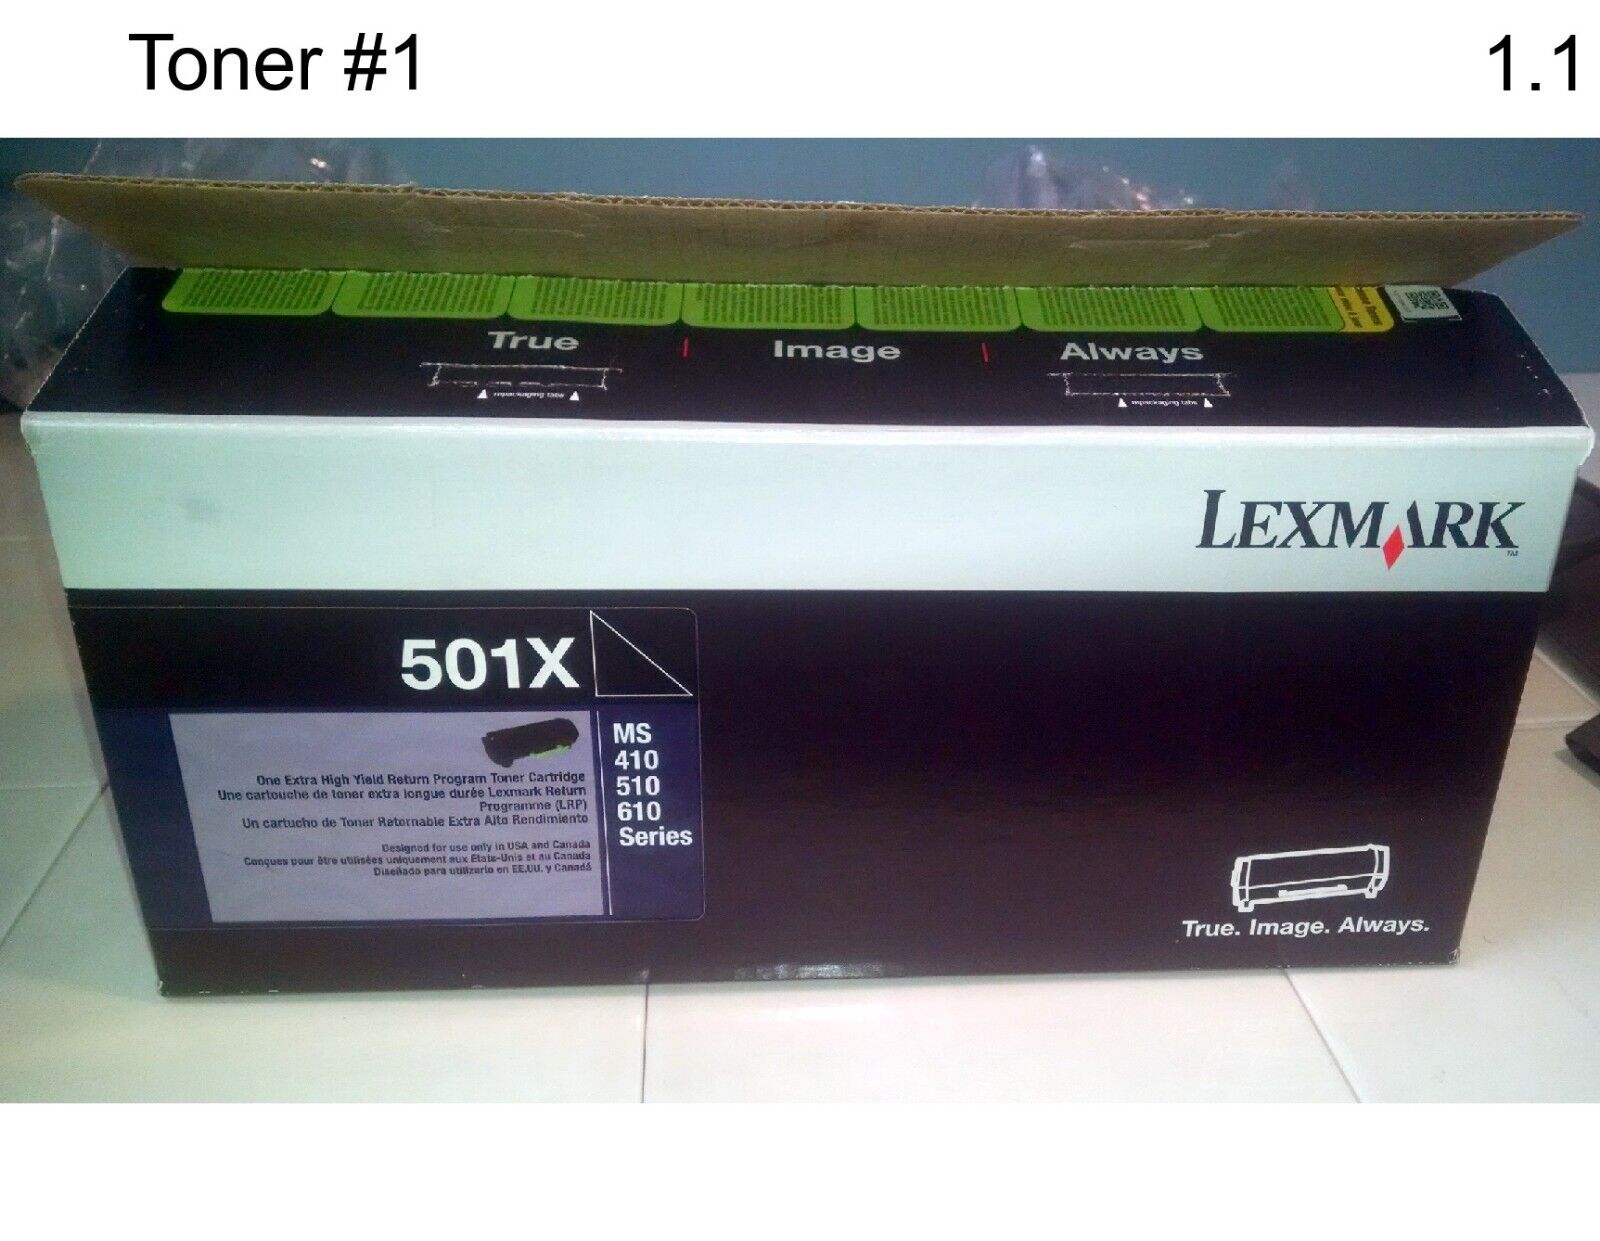 2 GENUINE OEM LEXMARK (501X) BLACK TONER CARTRIDGES NEW Open Box *SAVE*